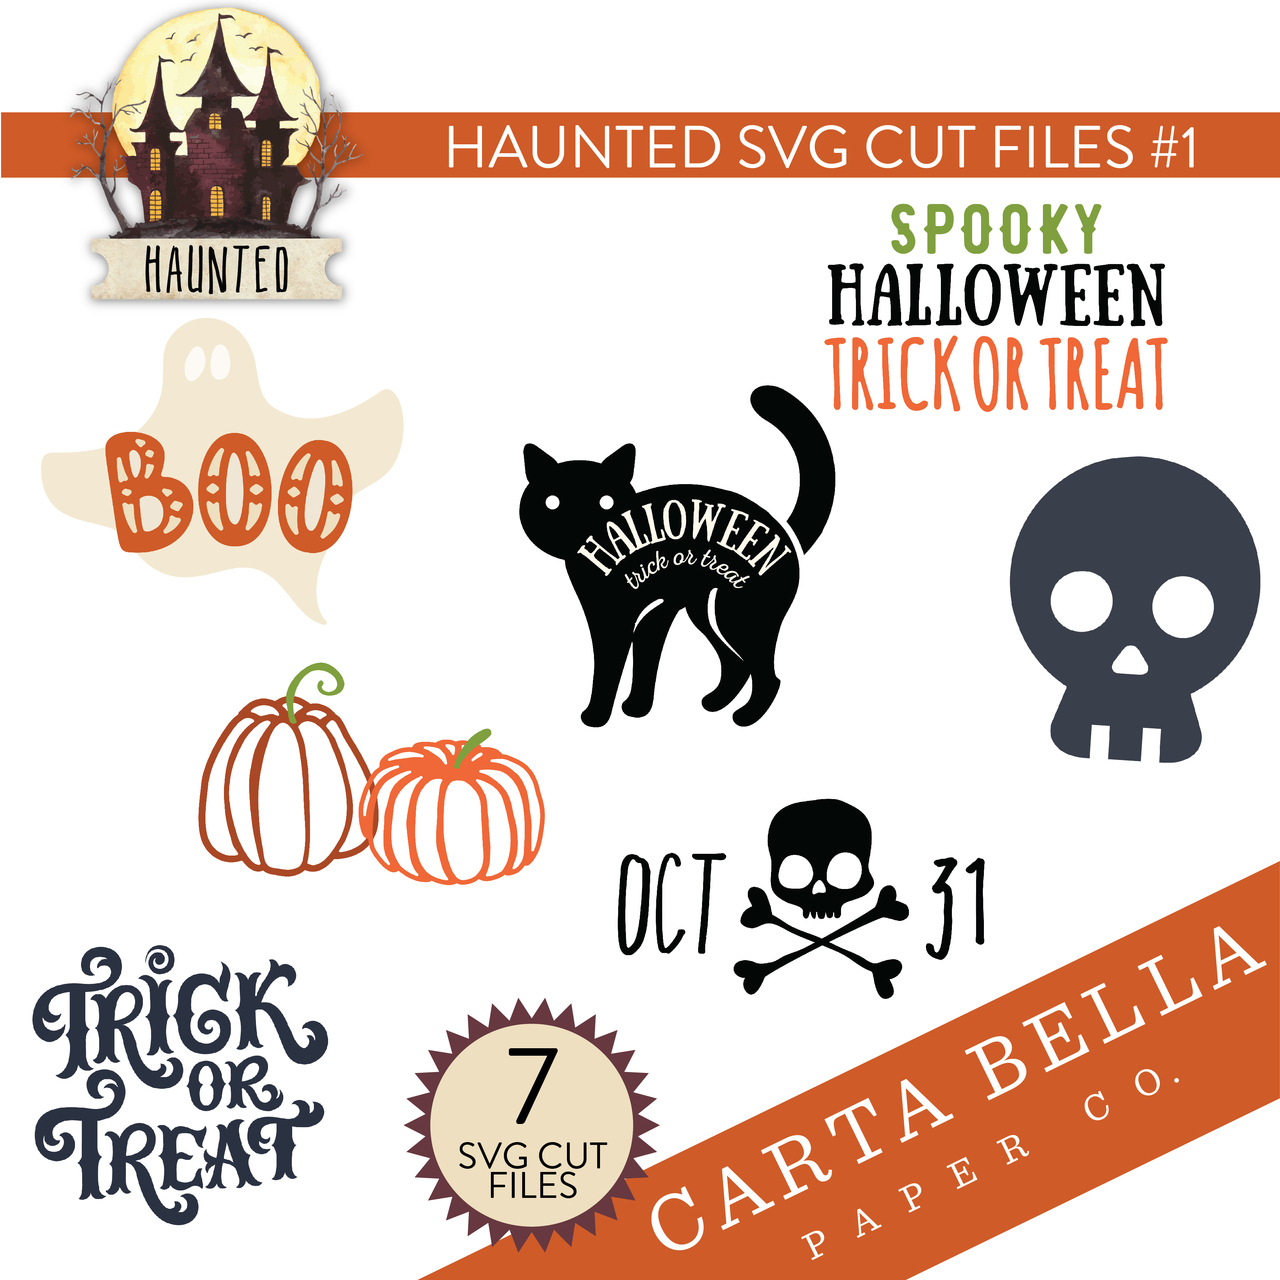 Haunted SVG Cut Files #1